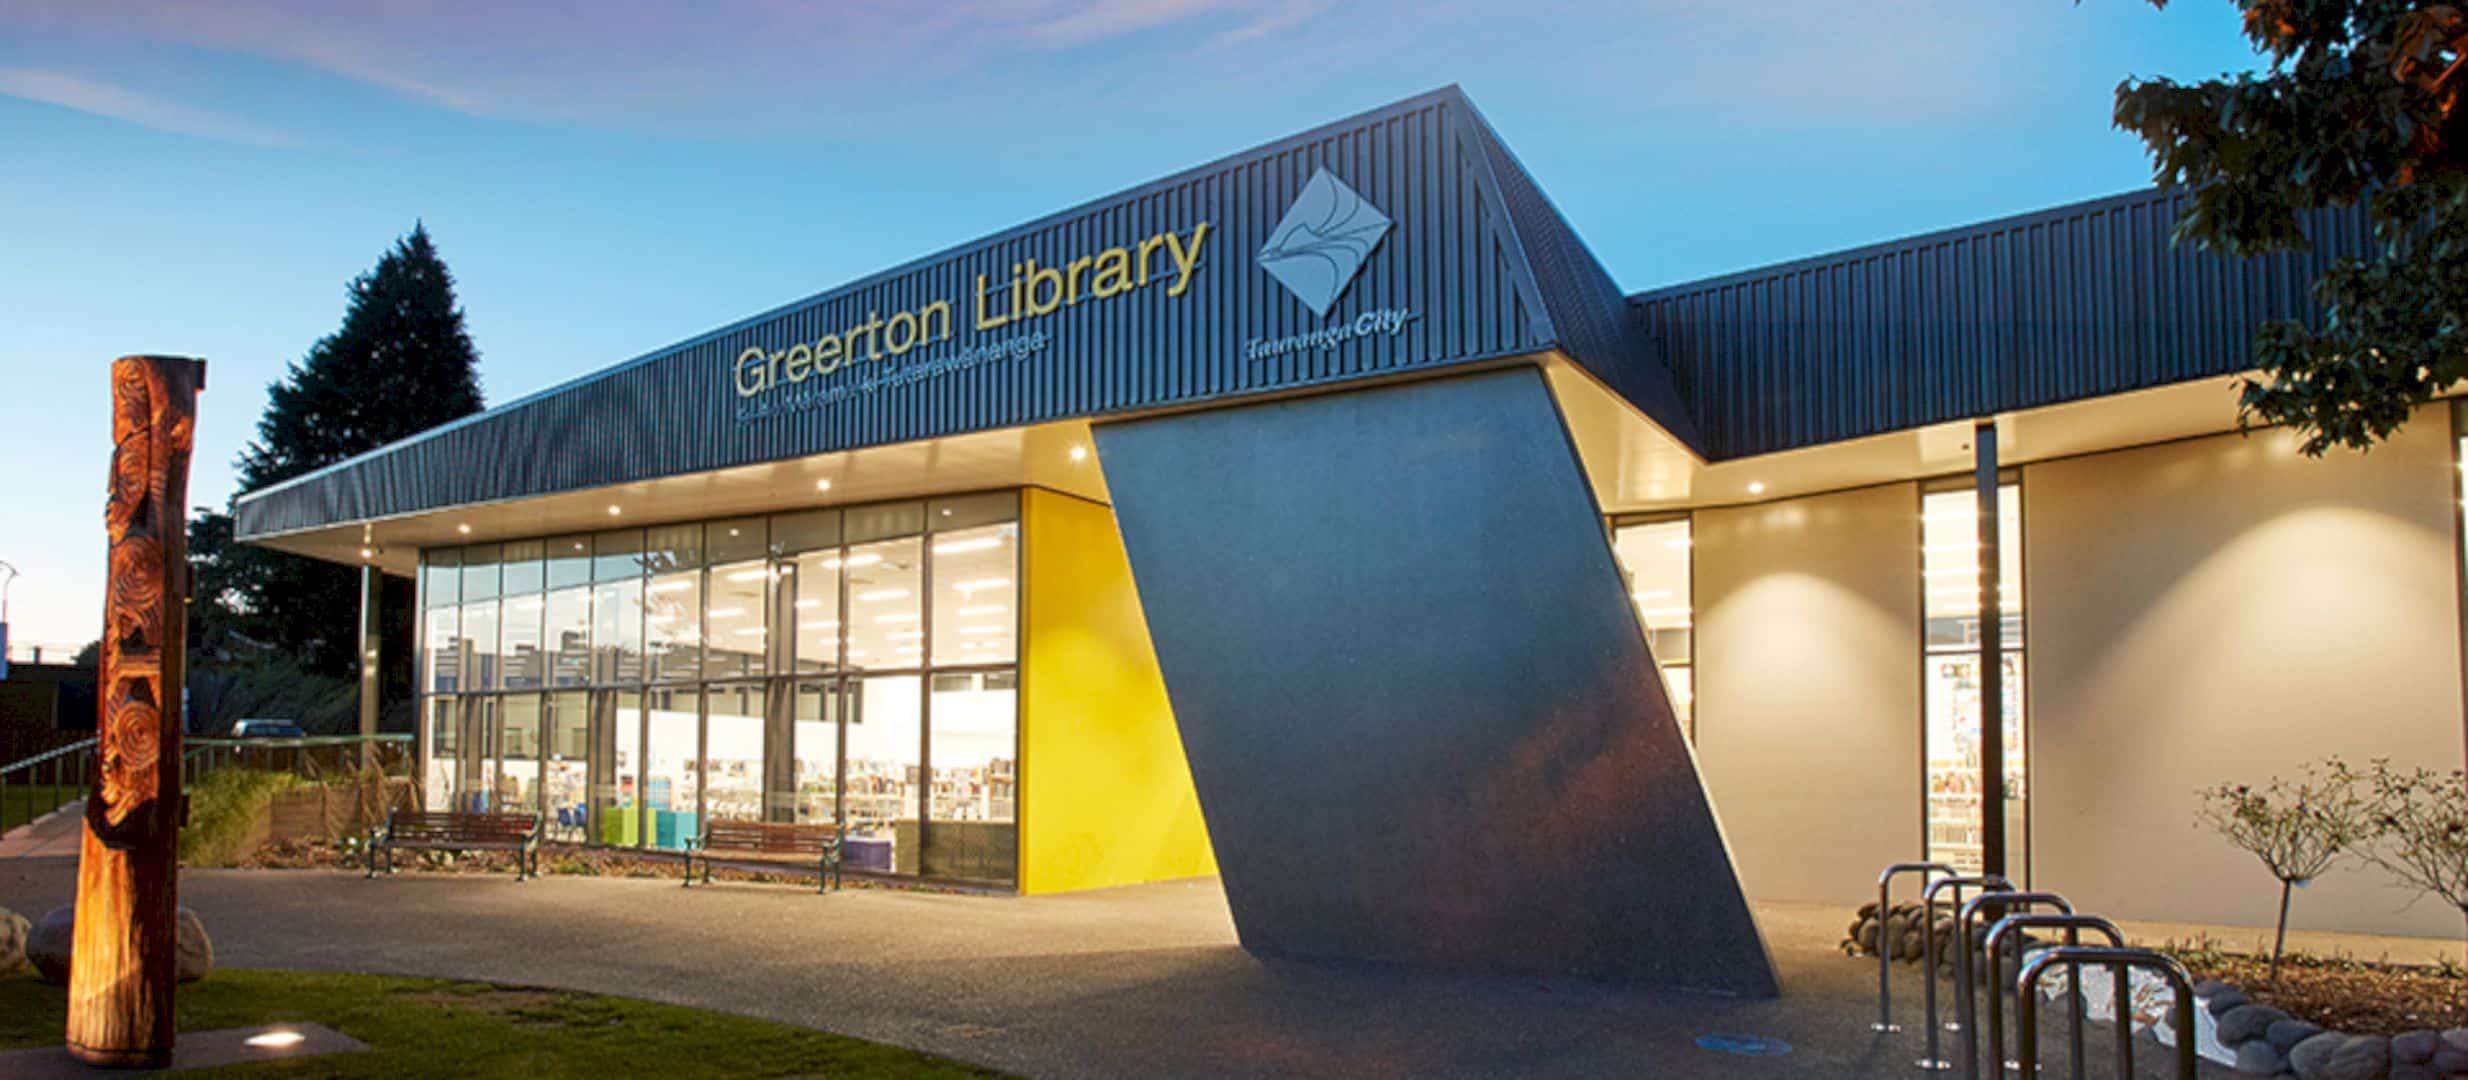 Greerton Library 4